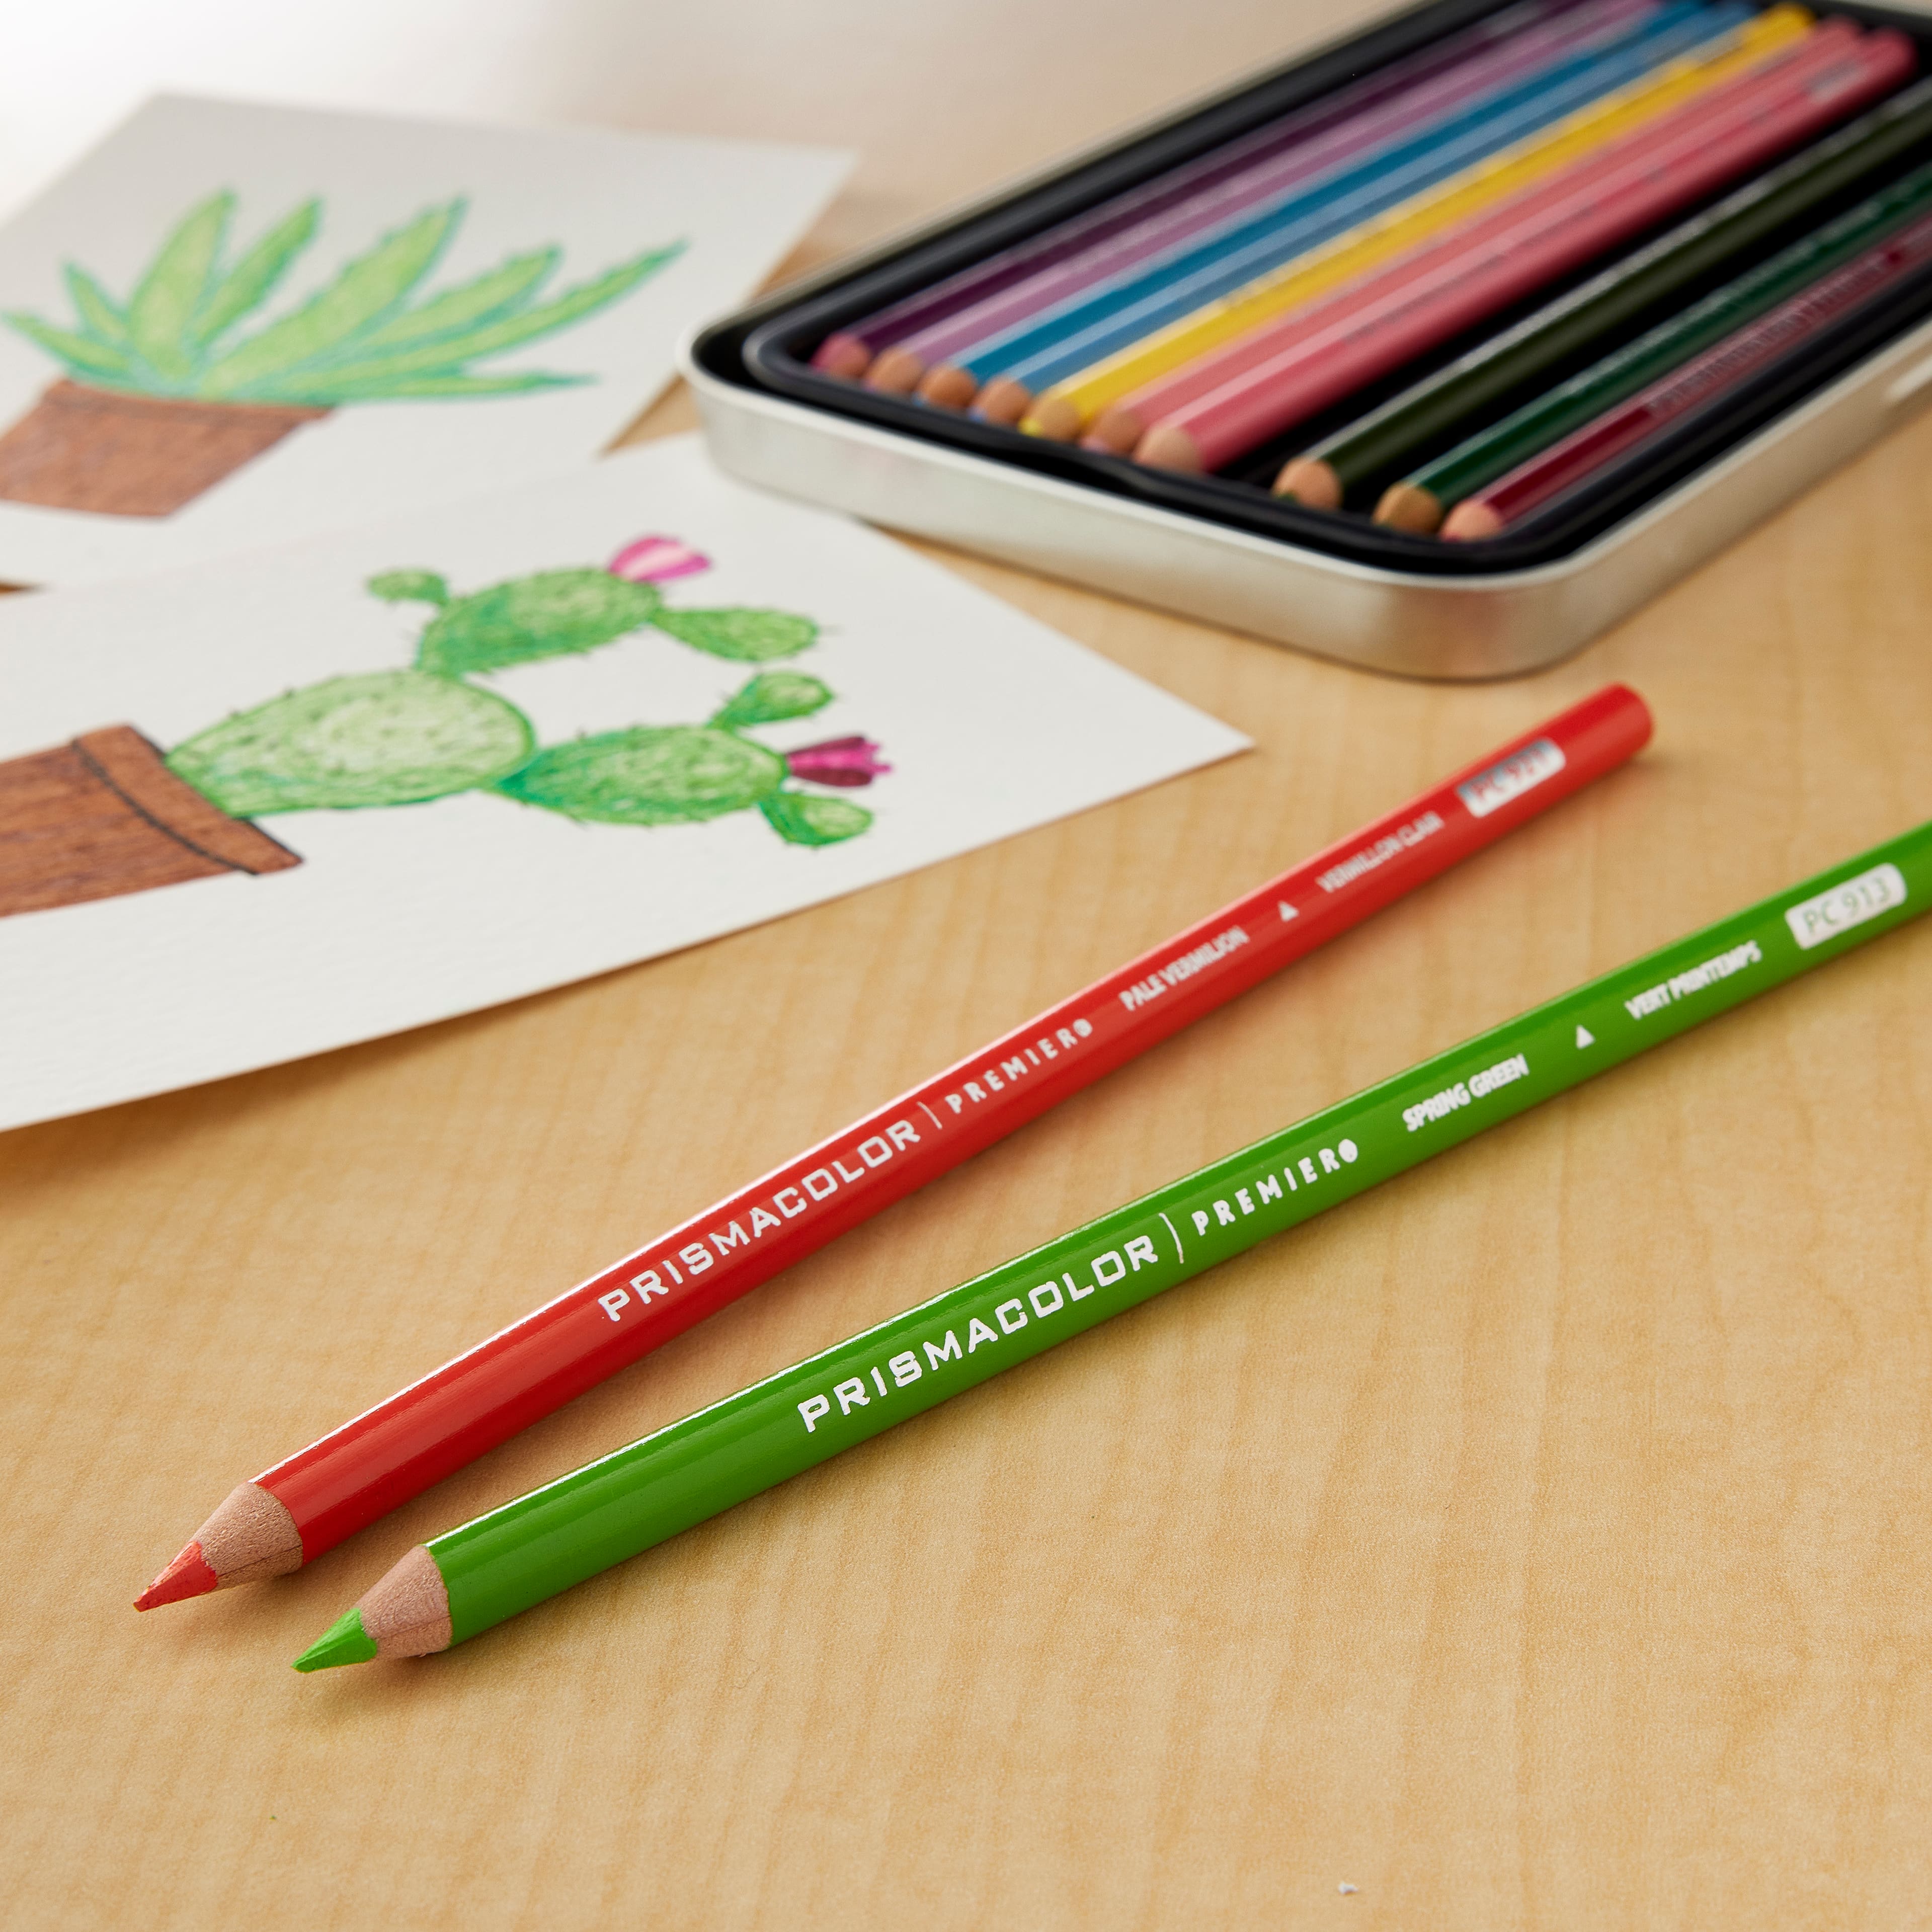 6 Packs: 12 ct. (72 total) Prismacolor&#xAE; Premier&#xAE; Botanical Garden Colored Pencils